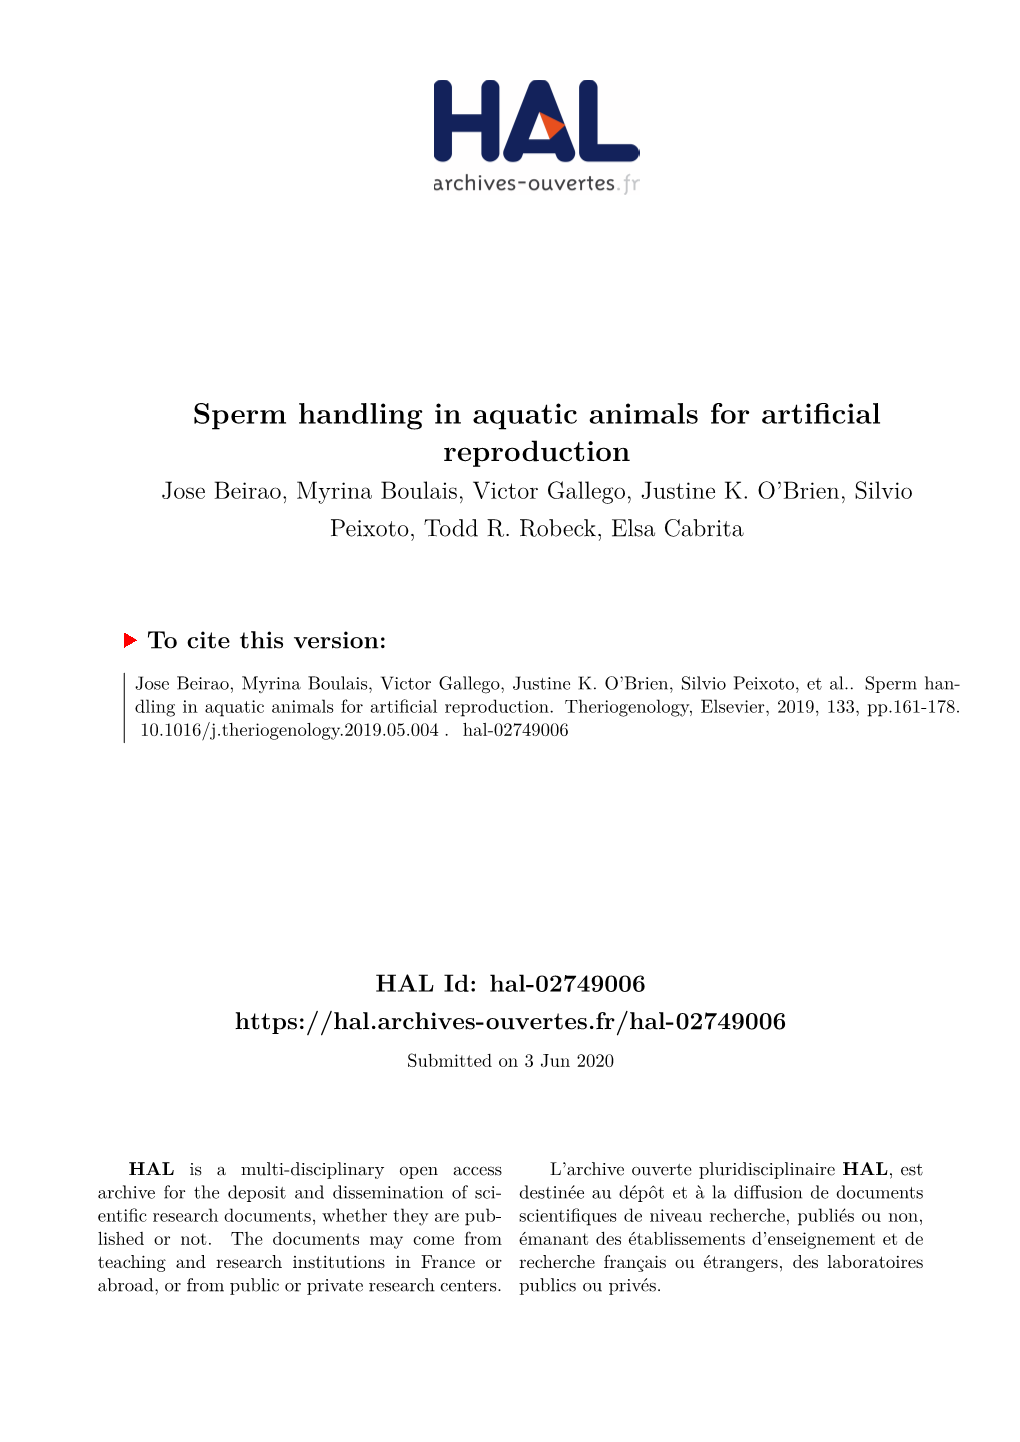 Sperm Handling in Aquatic Animals for Artificial Reproduction Jose Beirao, Myrina Boulais, Victor Gallego, Justine K